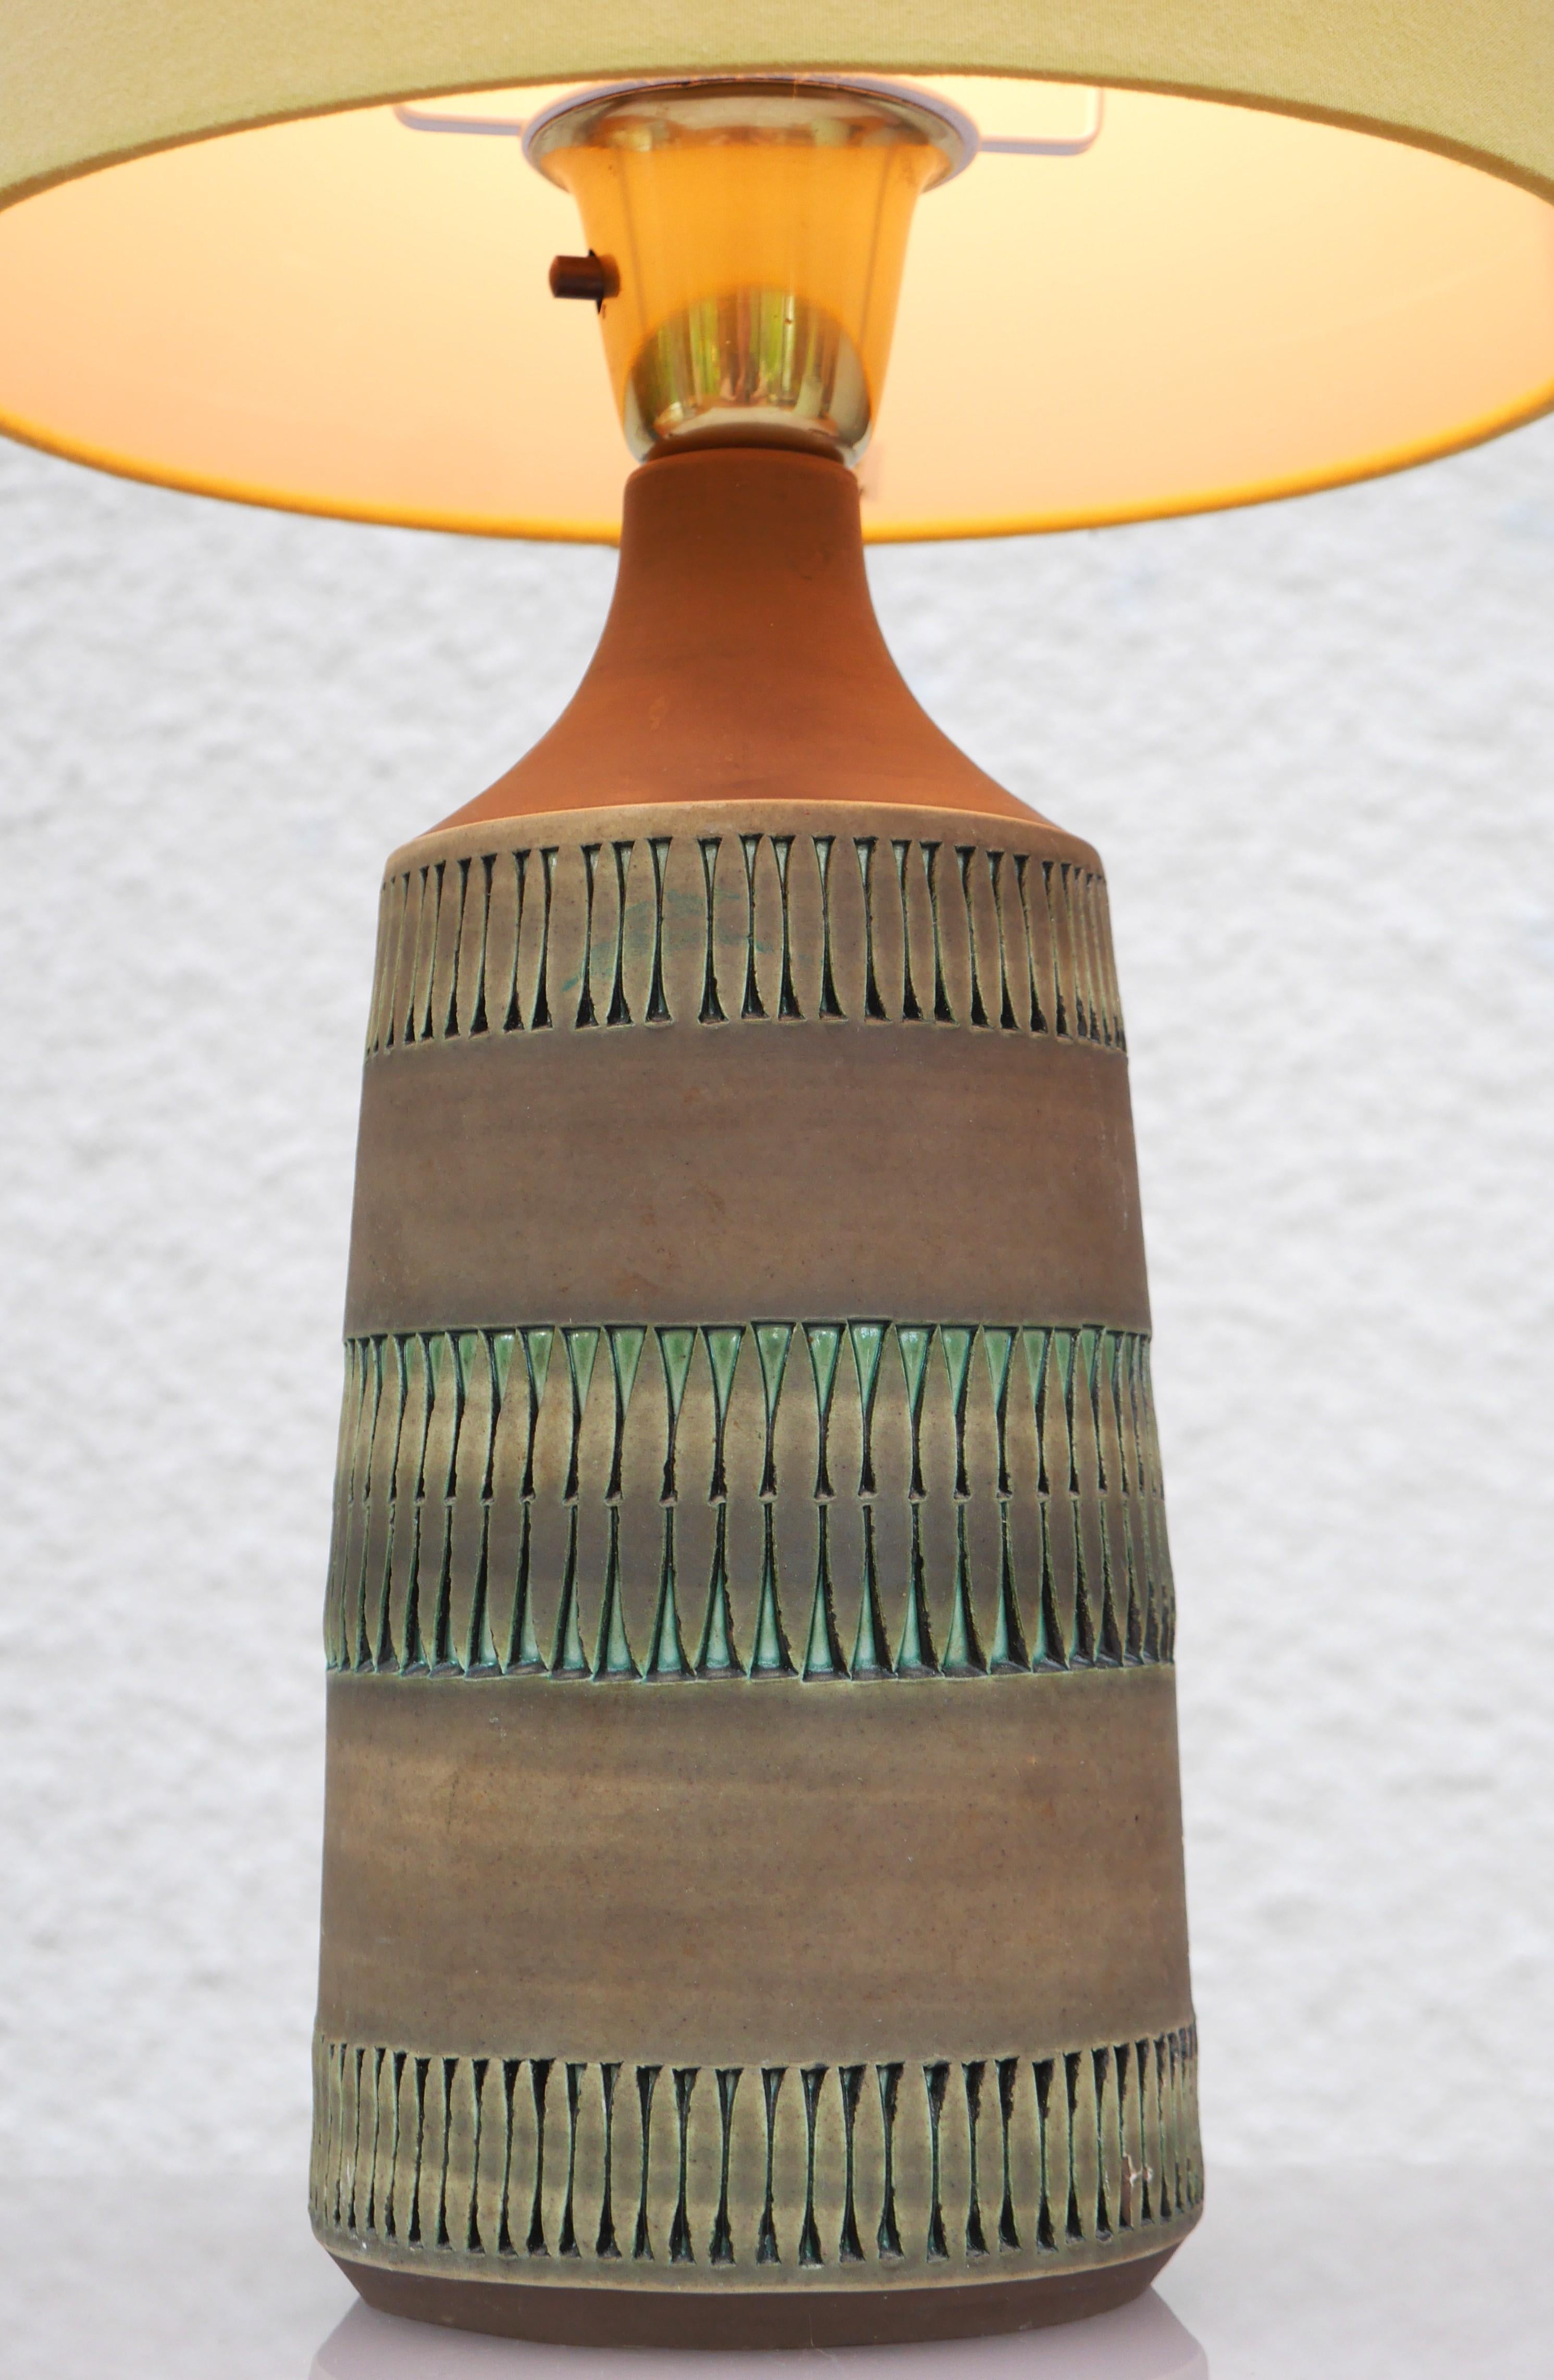 Hand-Crafted Ceramic Lamp Base from Alingsås, Sweden